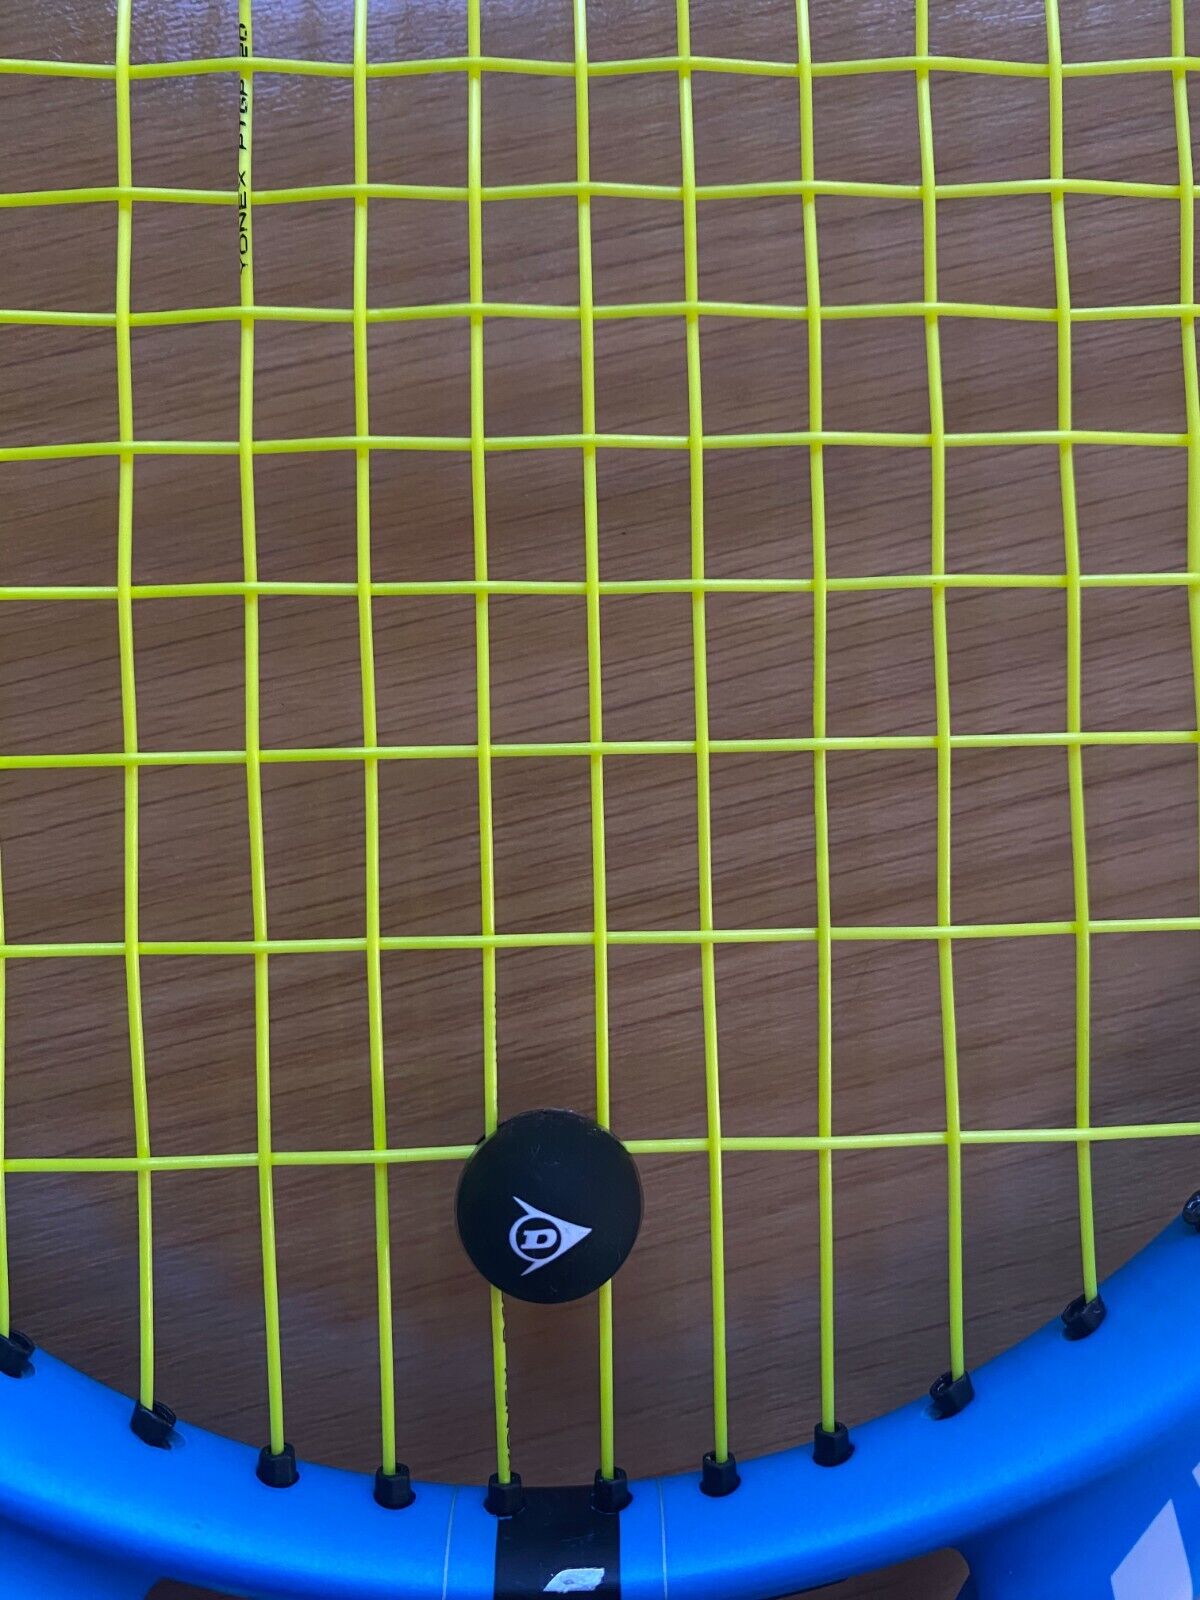 Dunlop Tennis Squash Vibration Dampener Shock Absorber Damper Ball 2 Pieces